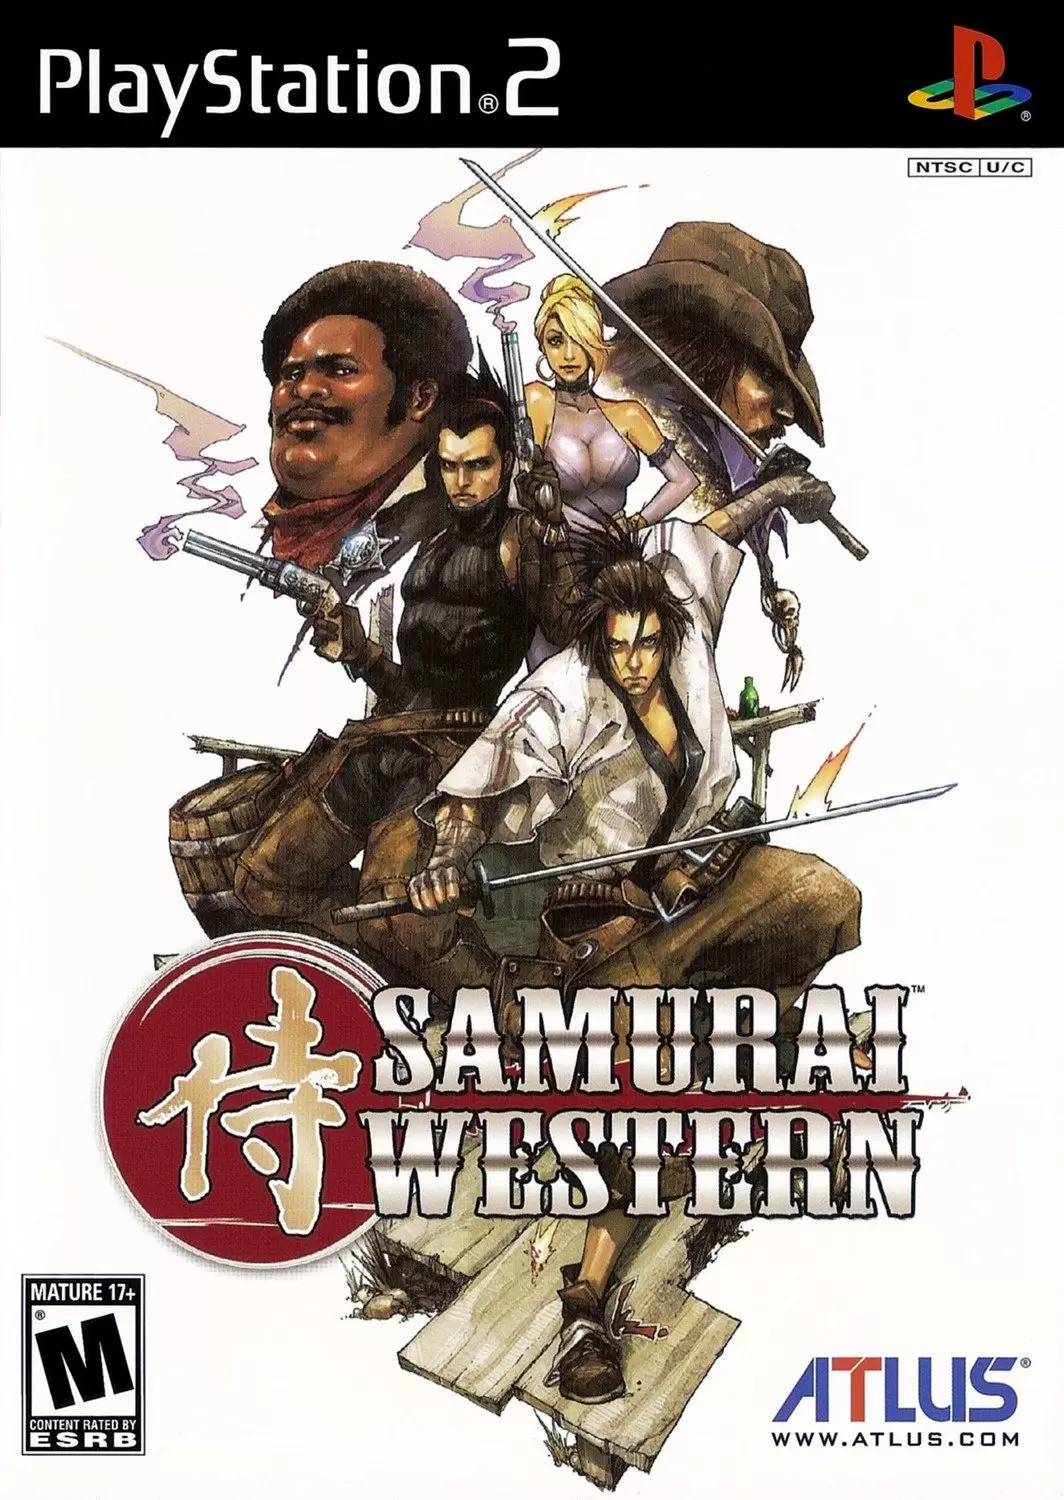 PS2 Games - Samurai Western